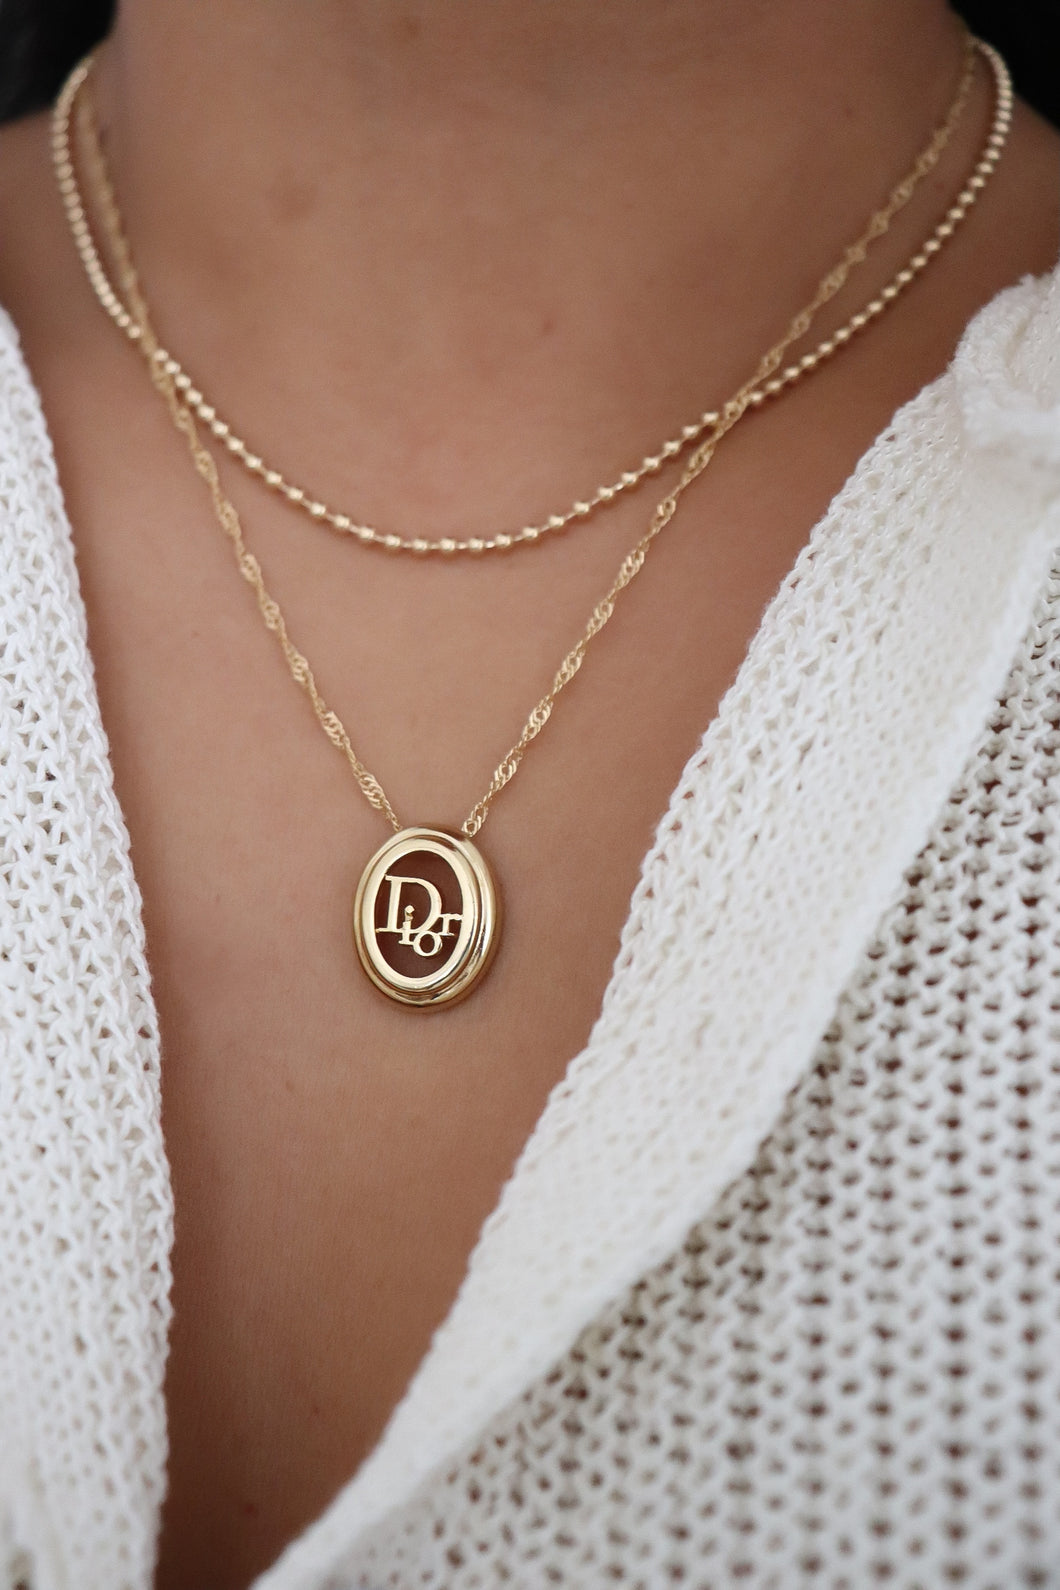 Dior golden pendant